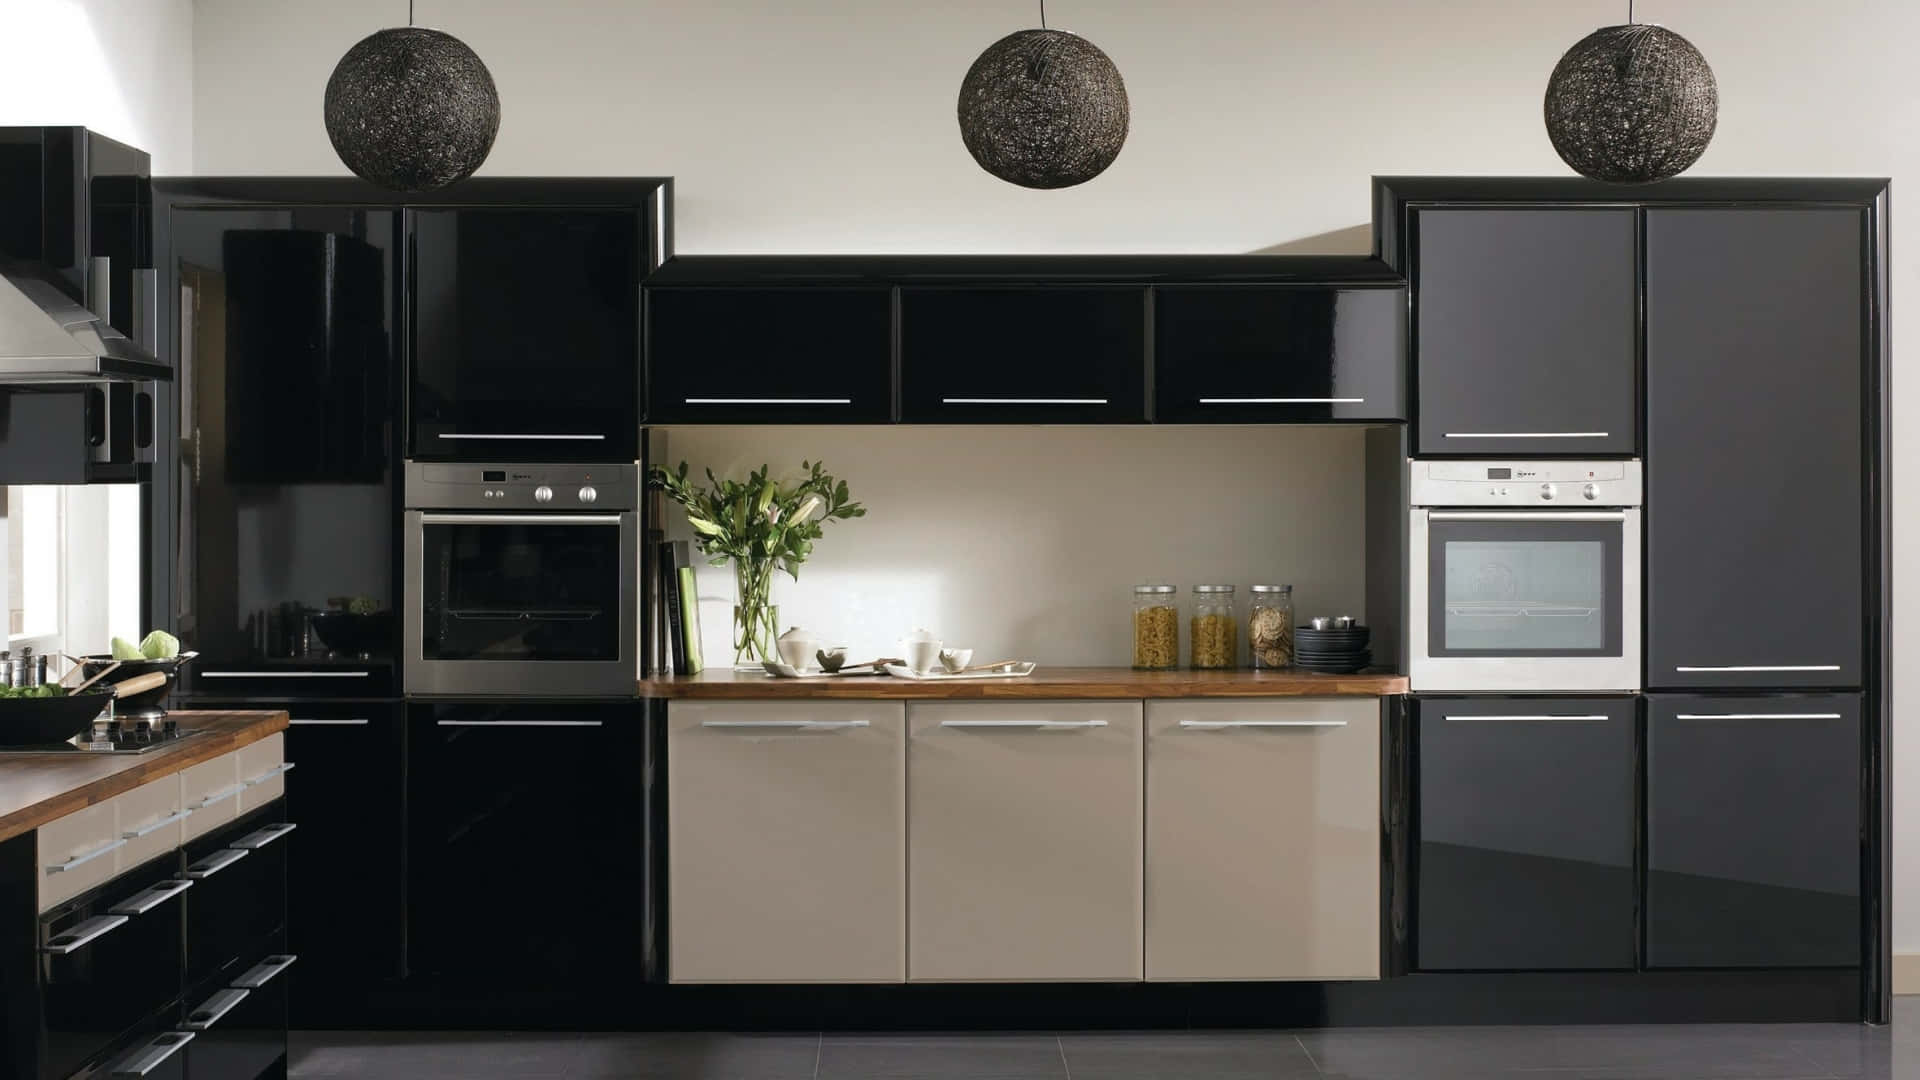 Download Glossy Black Cabinets 1920x1080 Kitchen Background ...